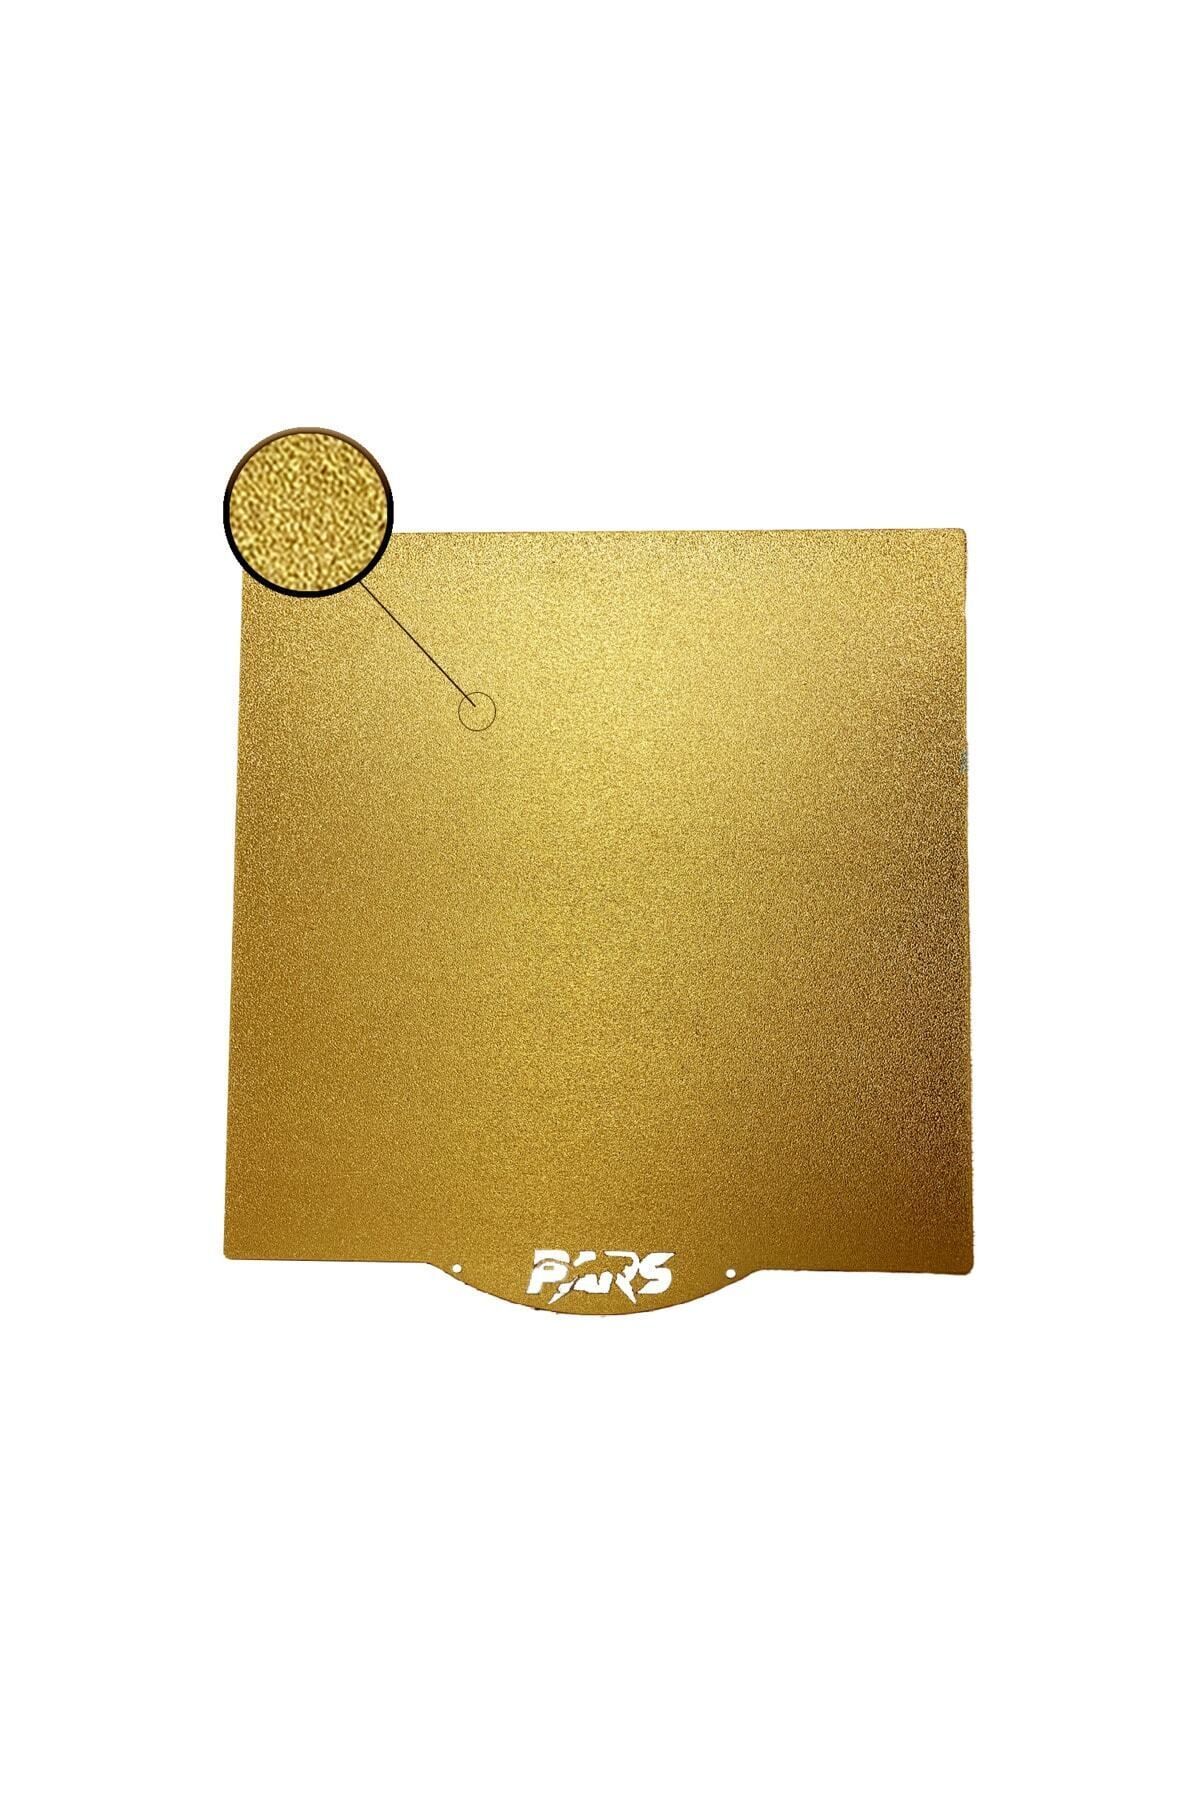 Pars 245x255 Mm Gold Pei Kaplı Özel Yay Çeliği Tabla Magnetsiz